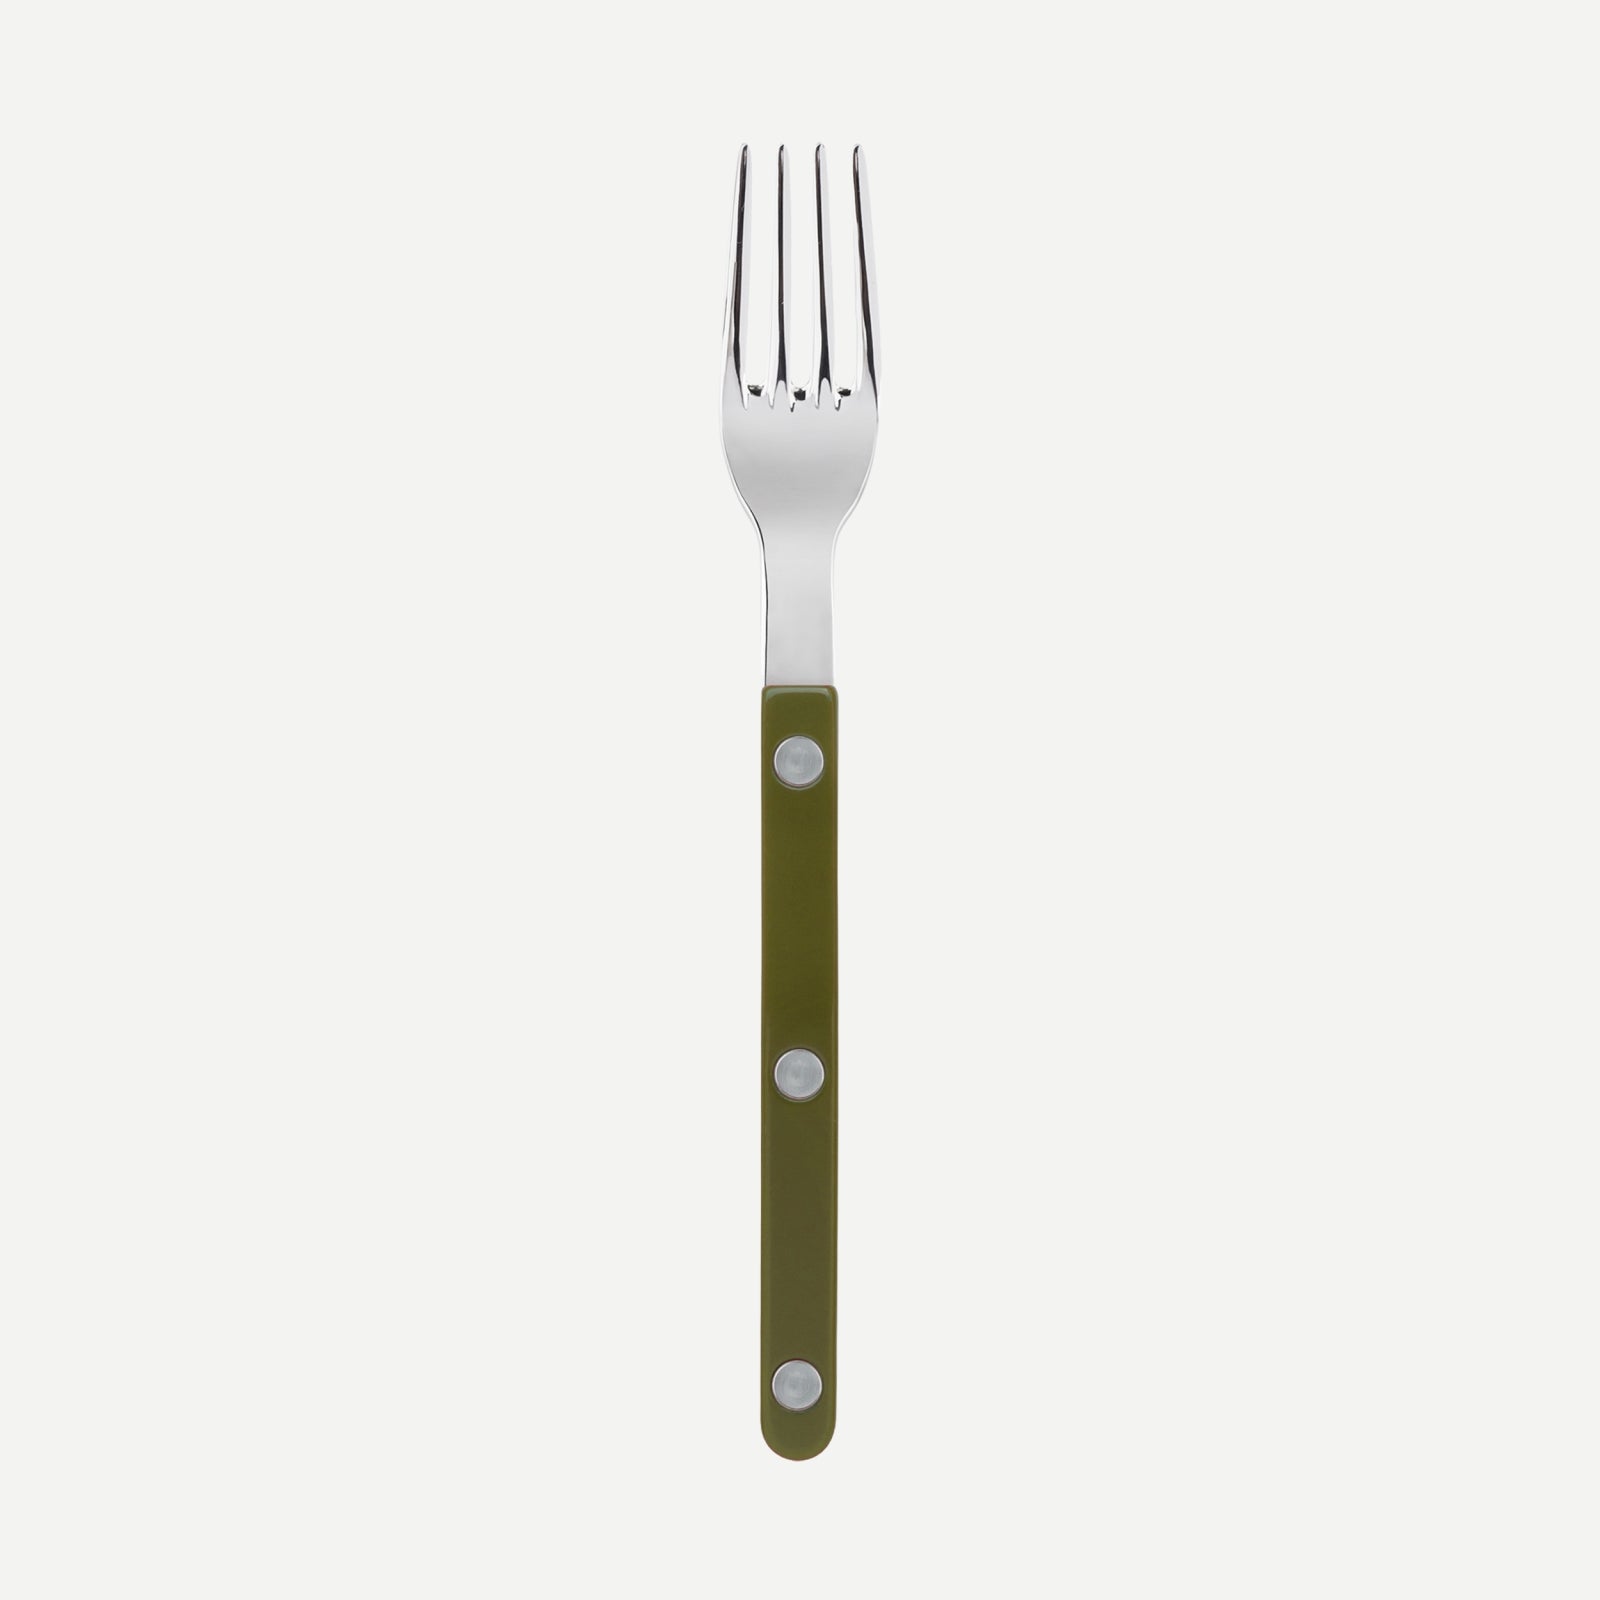 Petite fourchette - Bistrot uni - Vert fougere